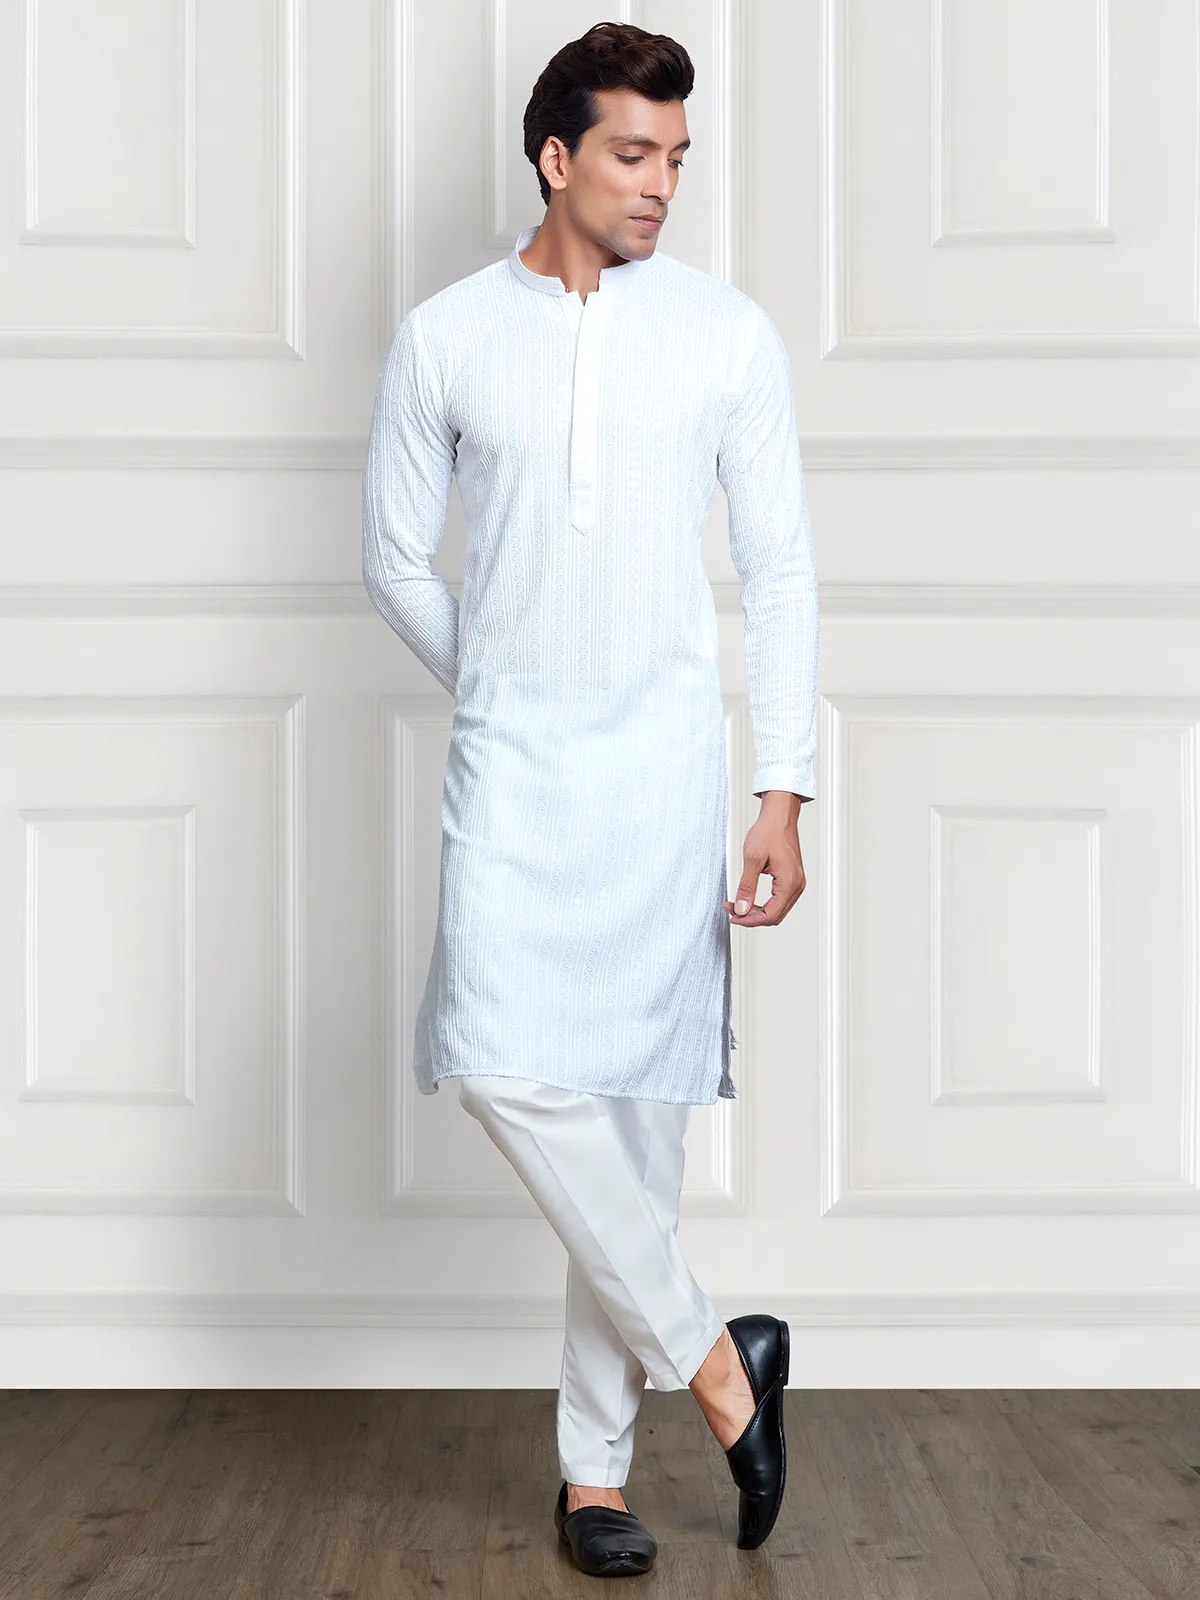 Classic white kurta suit for festive